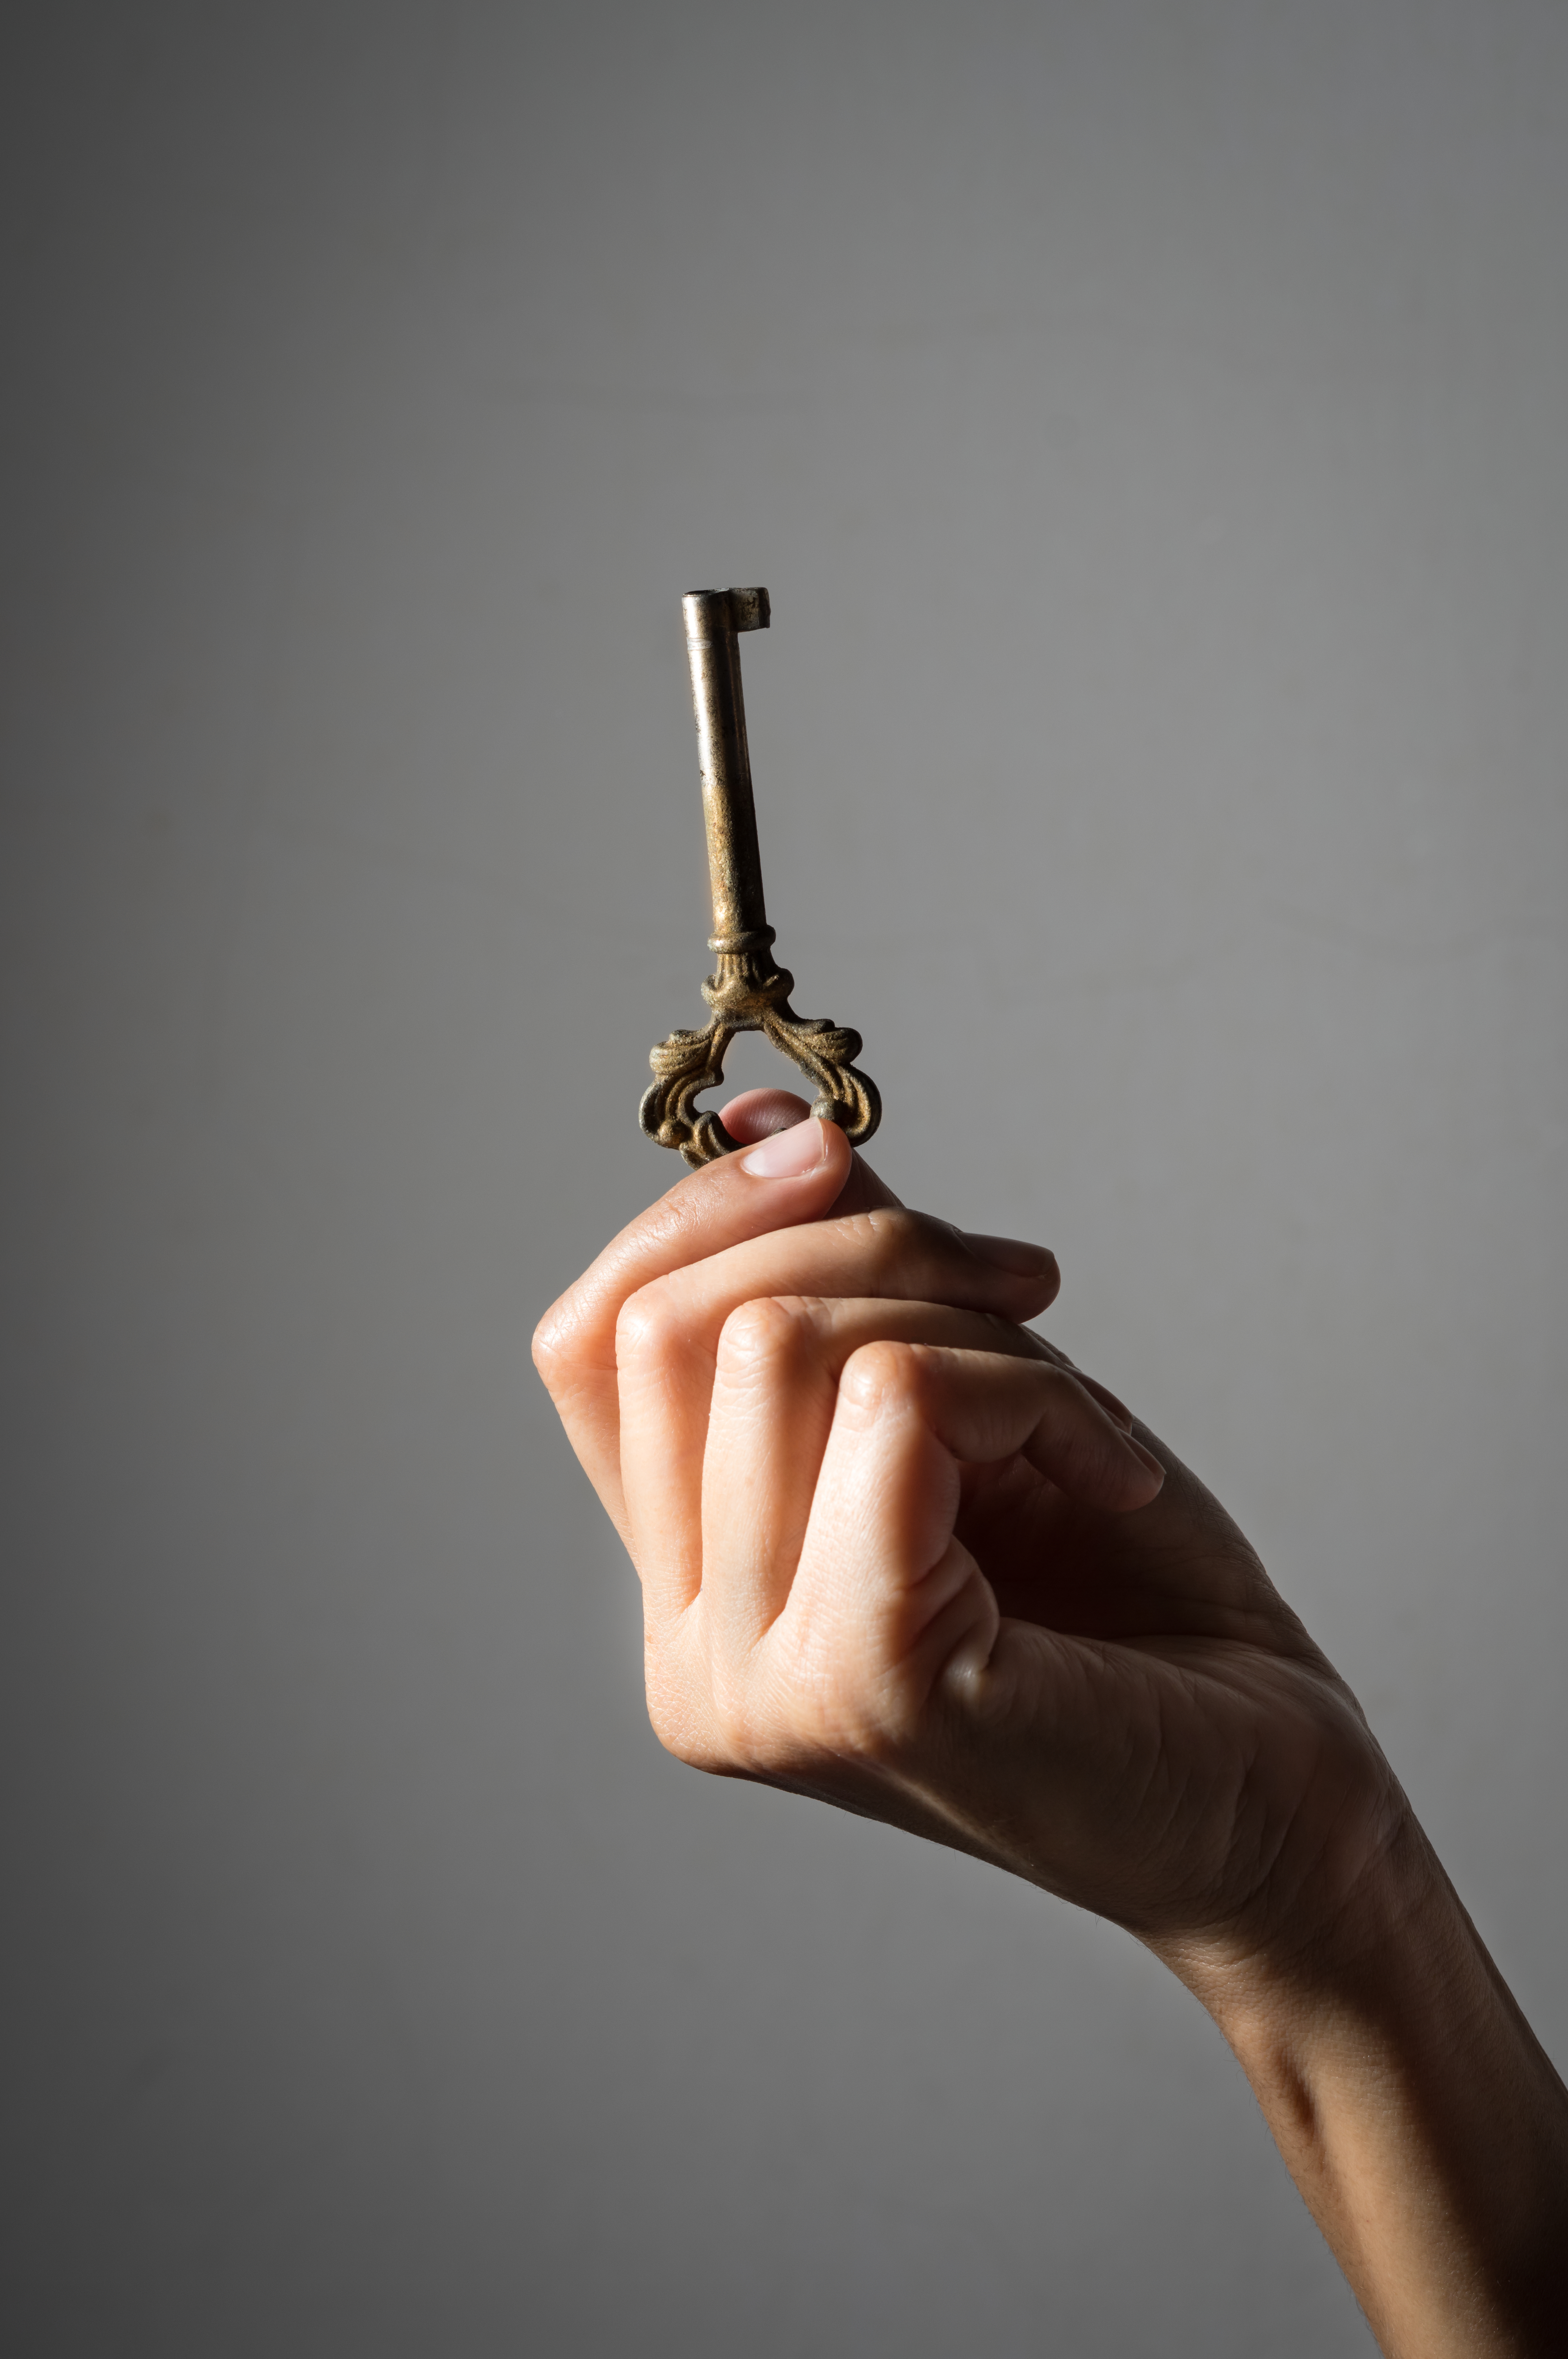 Old key in woman hand | Source: Shutterstock